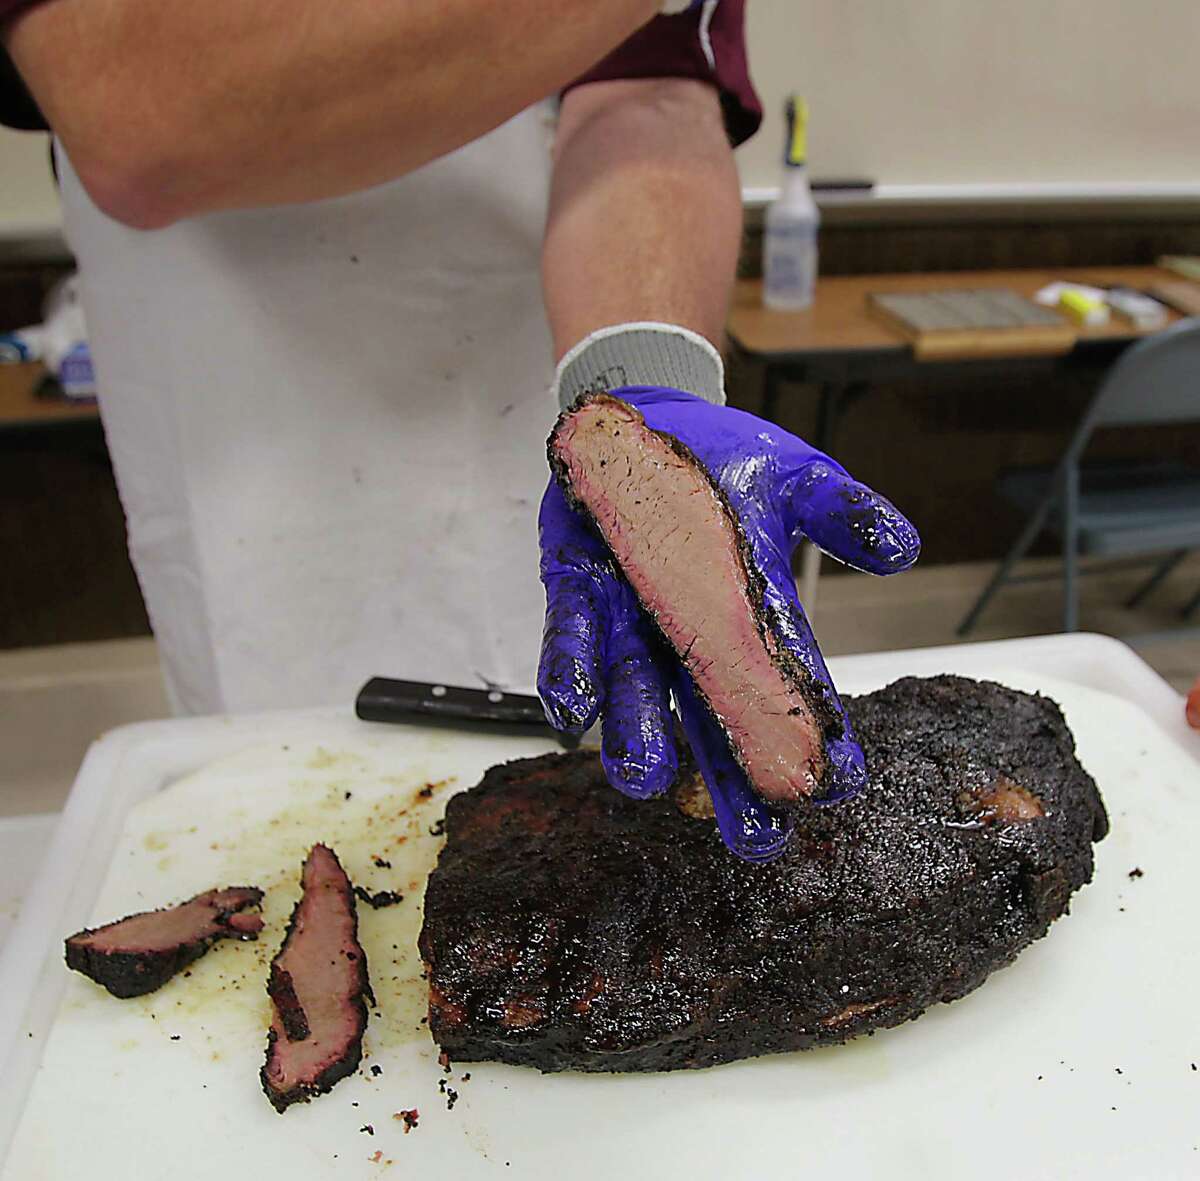 Camp Brisket spreads the gospel of Texas barbecue